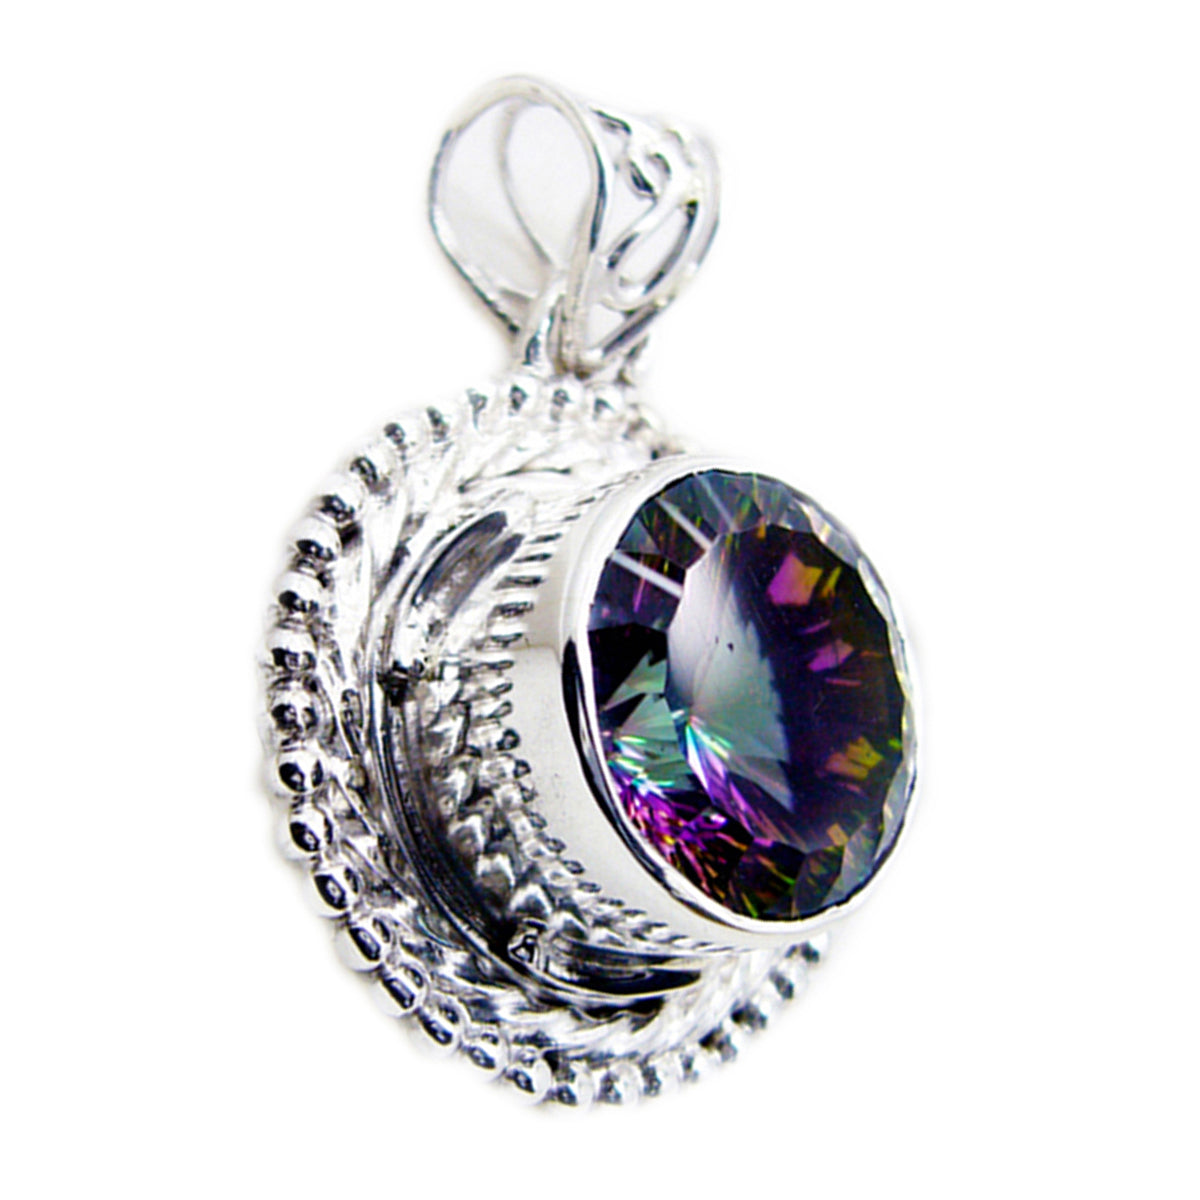 Riyo Drop Gemstone Round Faceted Multi Color Mystic Quartz 1180 Sterling Silver Pendant Gift For Girlfriend